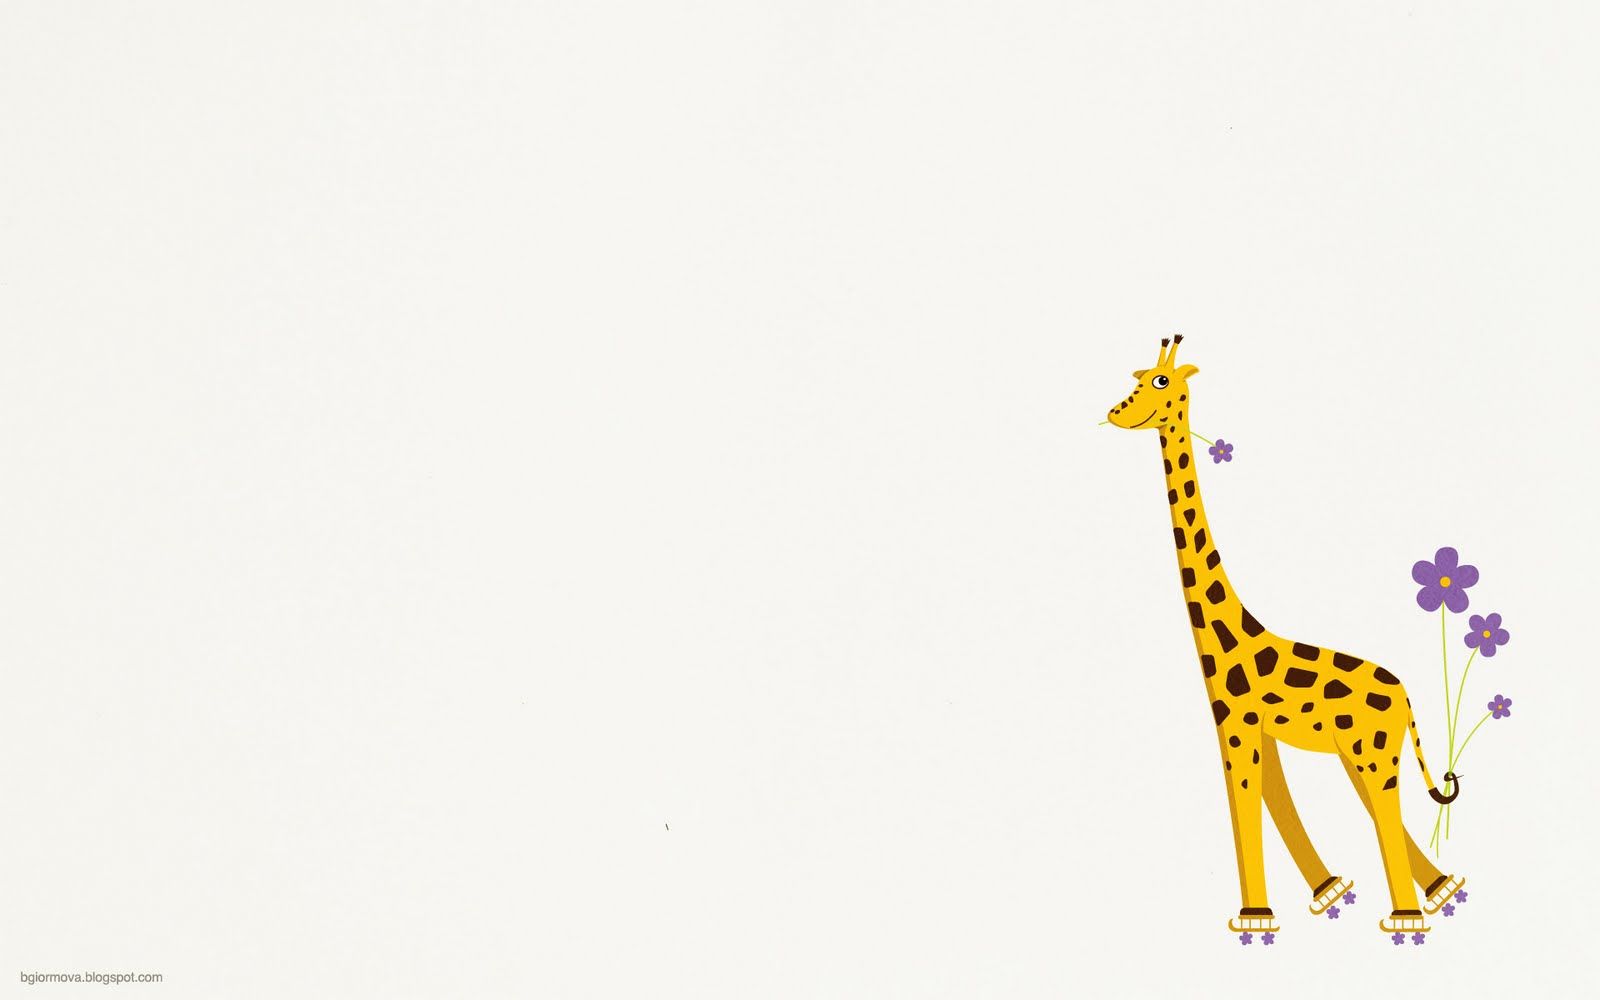  Giraffe Hintergrundbild 1600x1000. Free download 1920x1200 desktop wallpaper and an iPhone wallpaper with the giraffe [1600x1000] for your Desktop, Mobile & Tablet. Explore Cute Giraffe Wallpaper. Giraffe Desktop Background, Giraffe Wallpaper, Giraffe Background